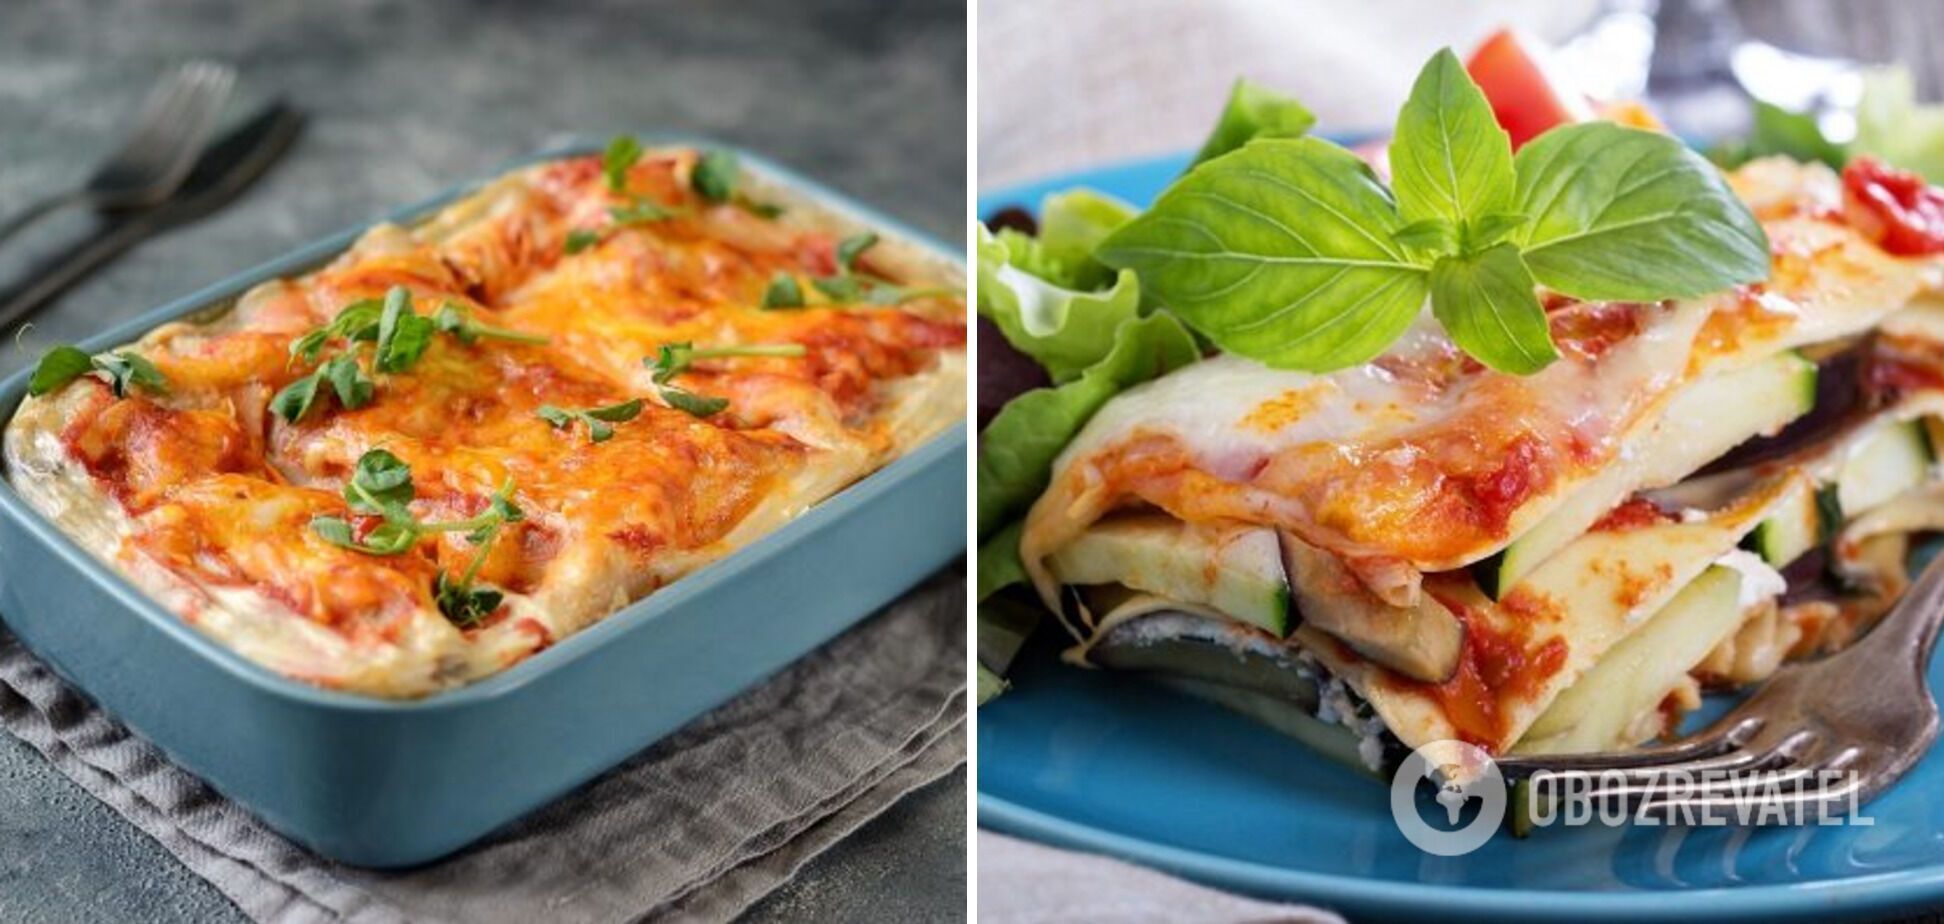 Lasagna with meat recipe